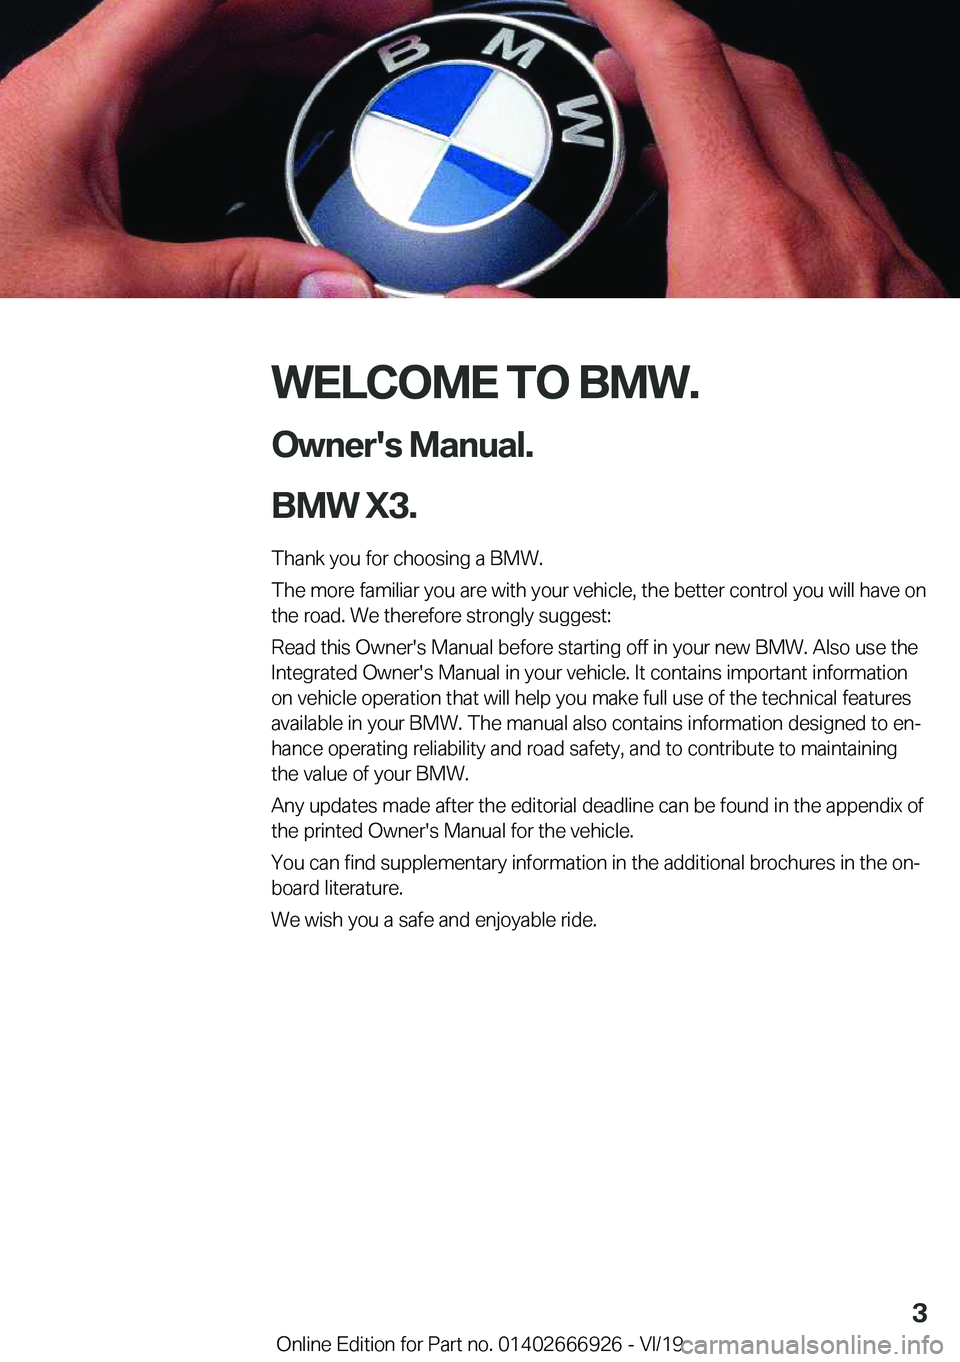 BMW X3 2020  Owners Manual �W�E�L�C�O�M�E��T�O��B�M�W�.�O�w�n�e�r�'�s��M�a�n�u�a�l�.
�B�M�W��X�3�.
�T�h�a�n�k��y�o�u��f�o�r��c�h�o�o�s�i�n�g��a��B�M�W�.
�T�h�e��m�o�r�e��f�a�m�i�l�i�a�r��y�o�u��a�r�e��w�i�t�h�